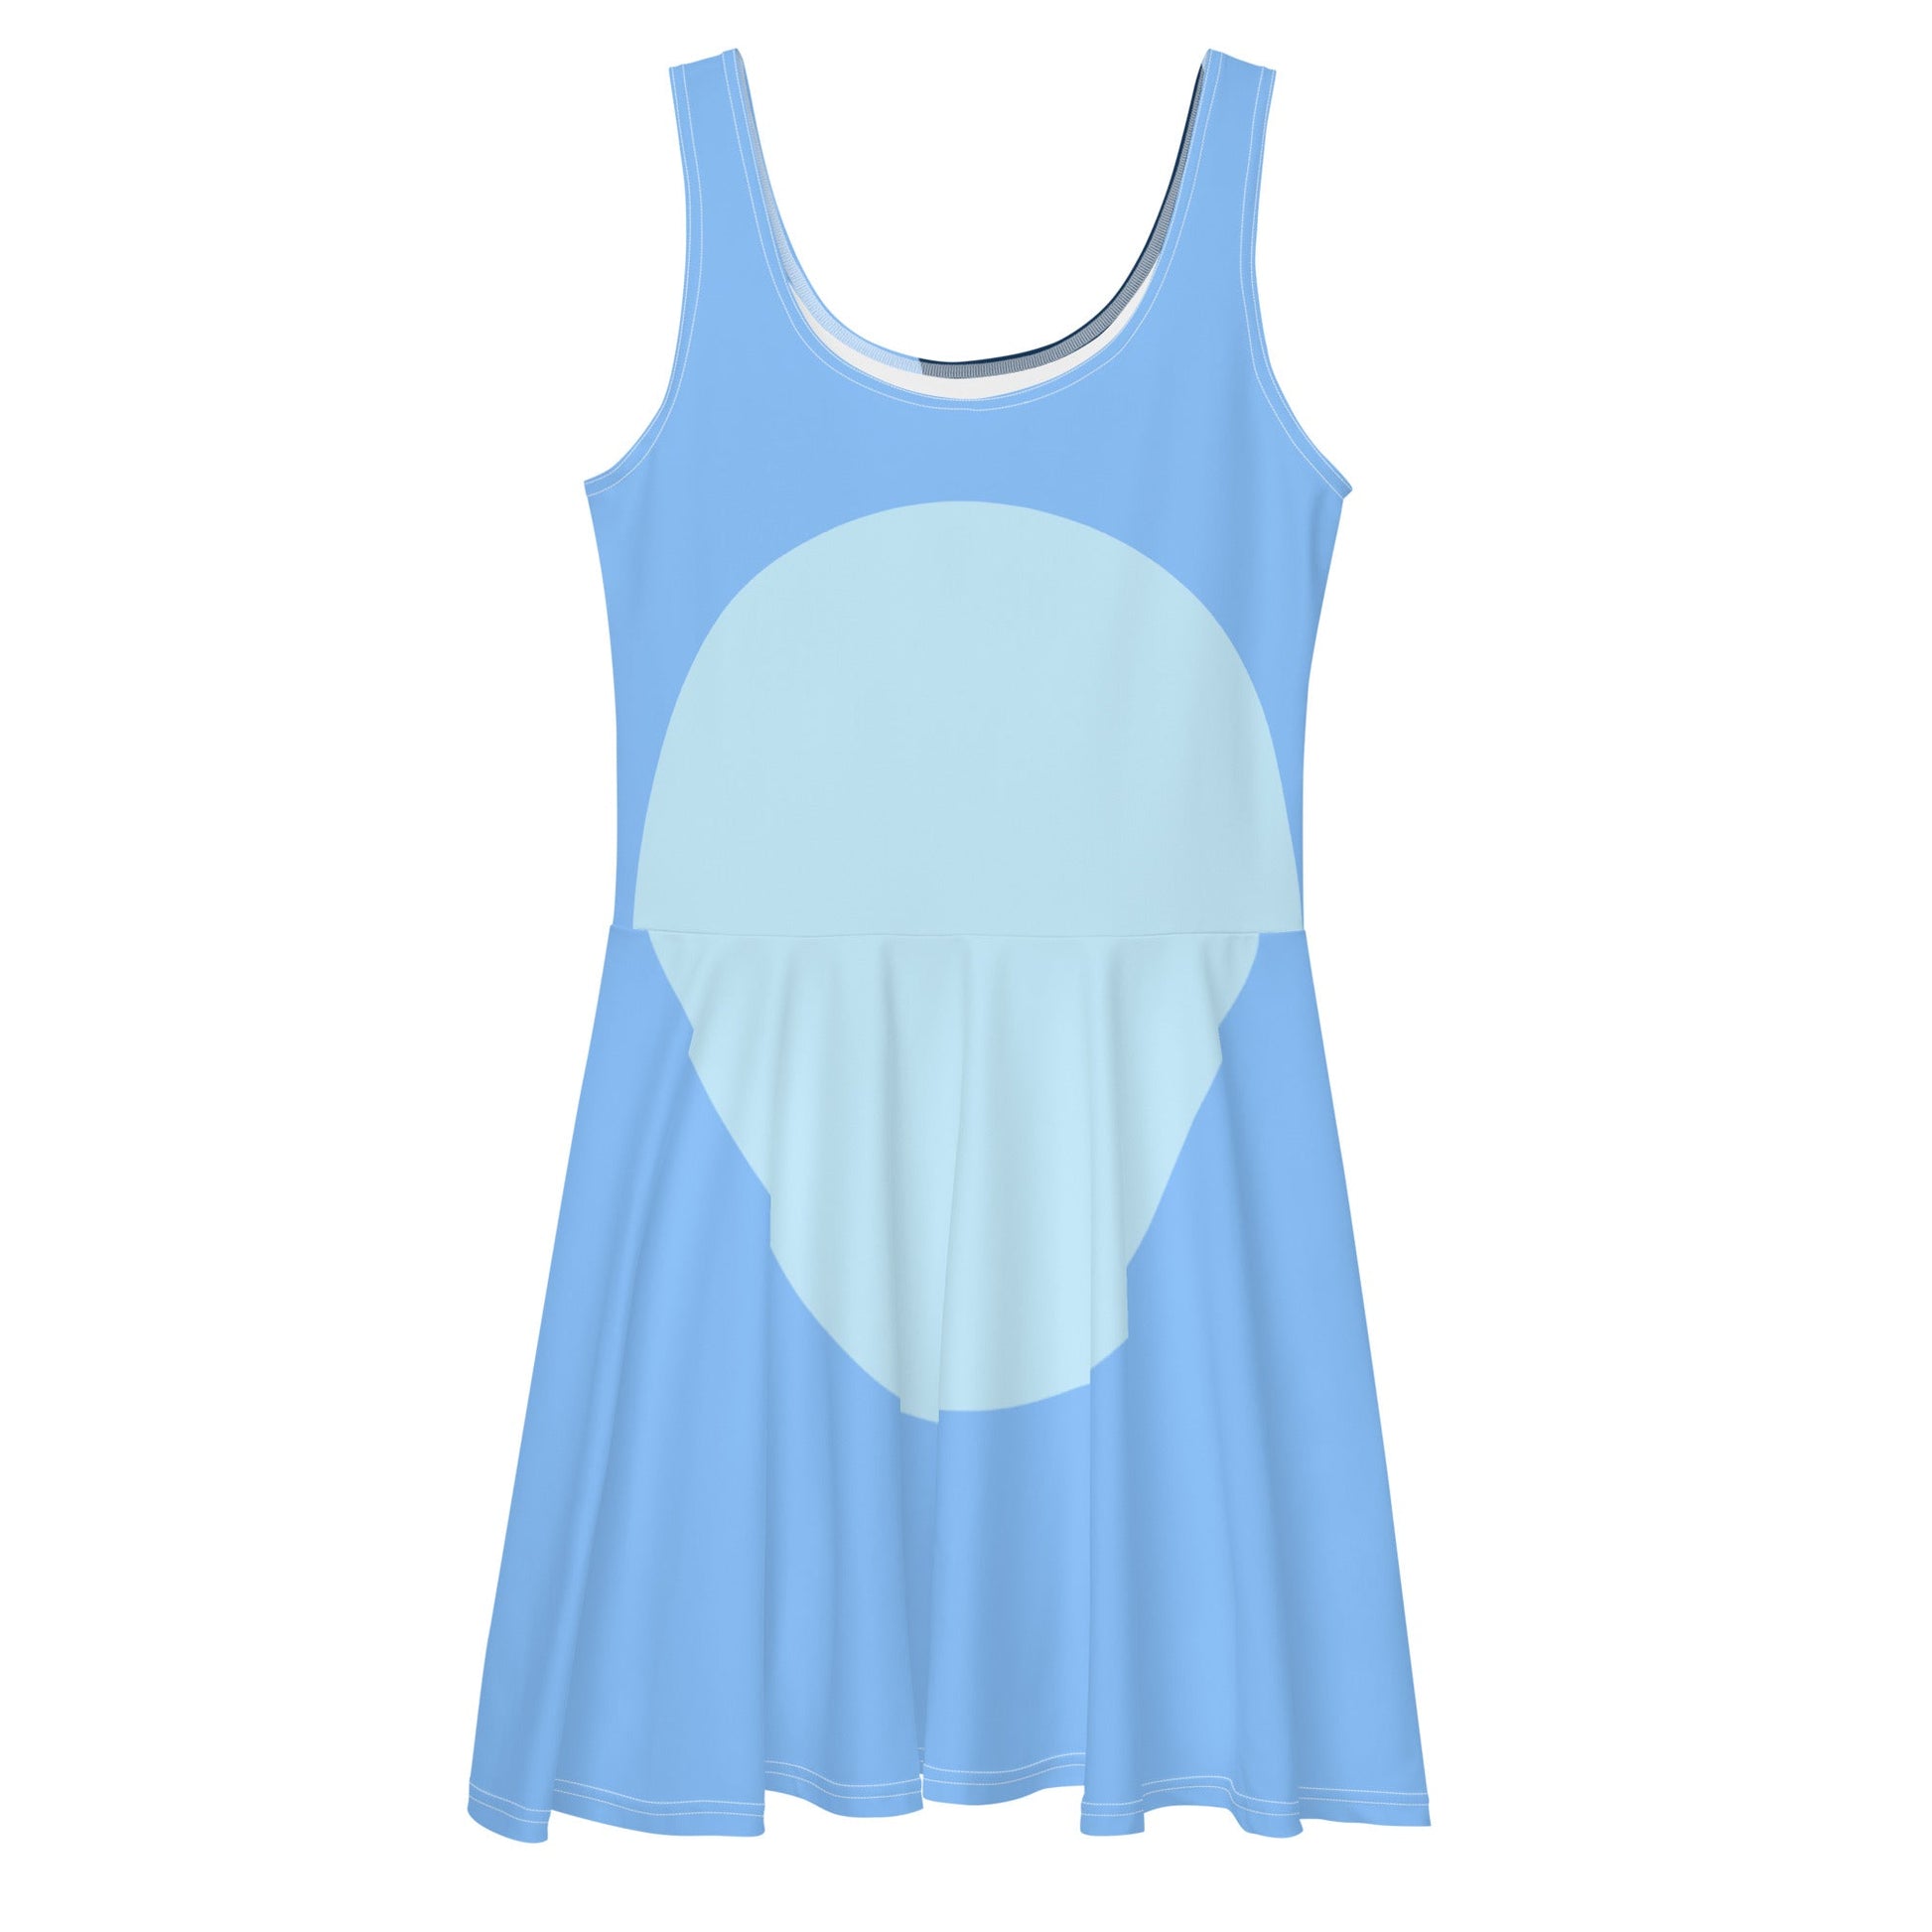 Blue Dog Skater Dress- Running Costume, Cosplay, Bounding Australian cartoon merchandisebingo blueybingo shirt#tag4##tag5##tag6#